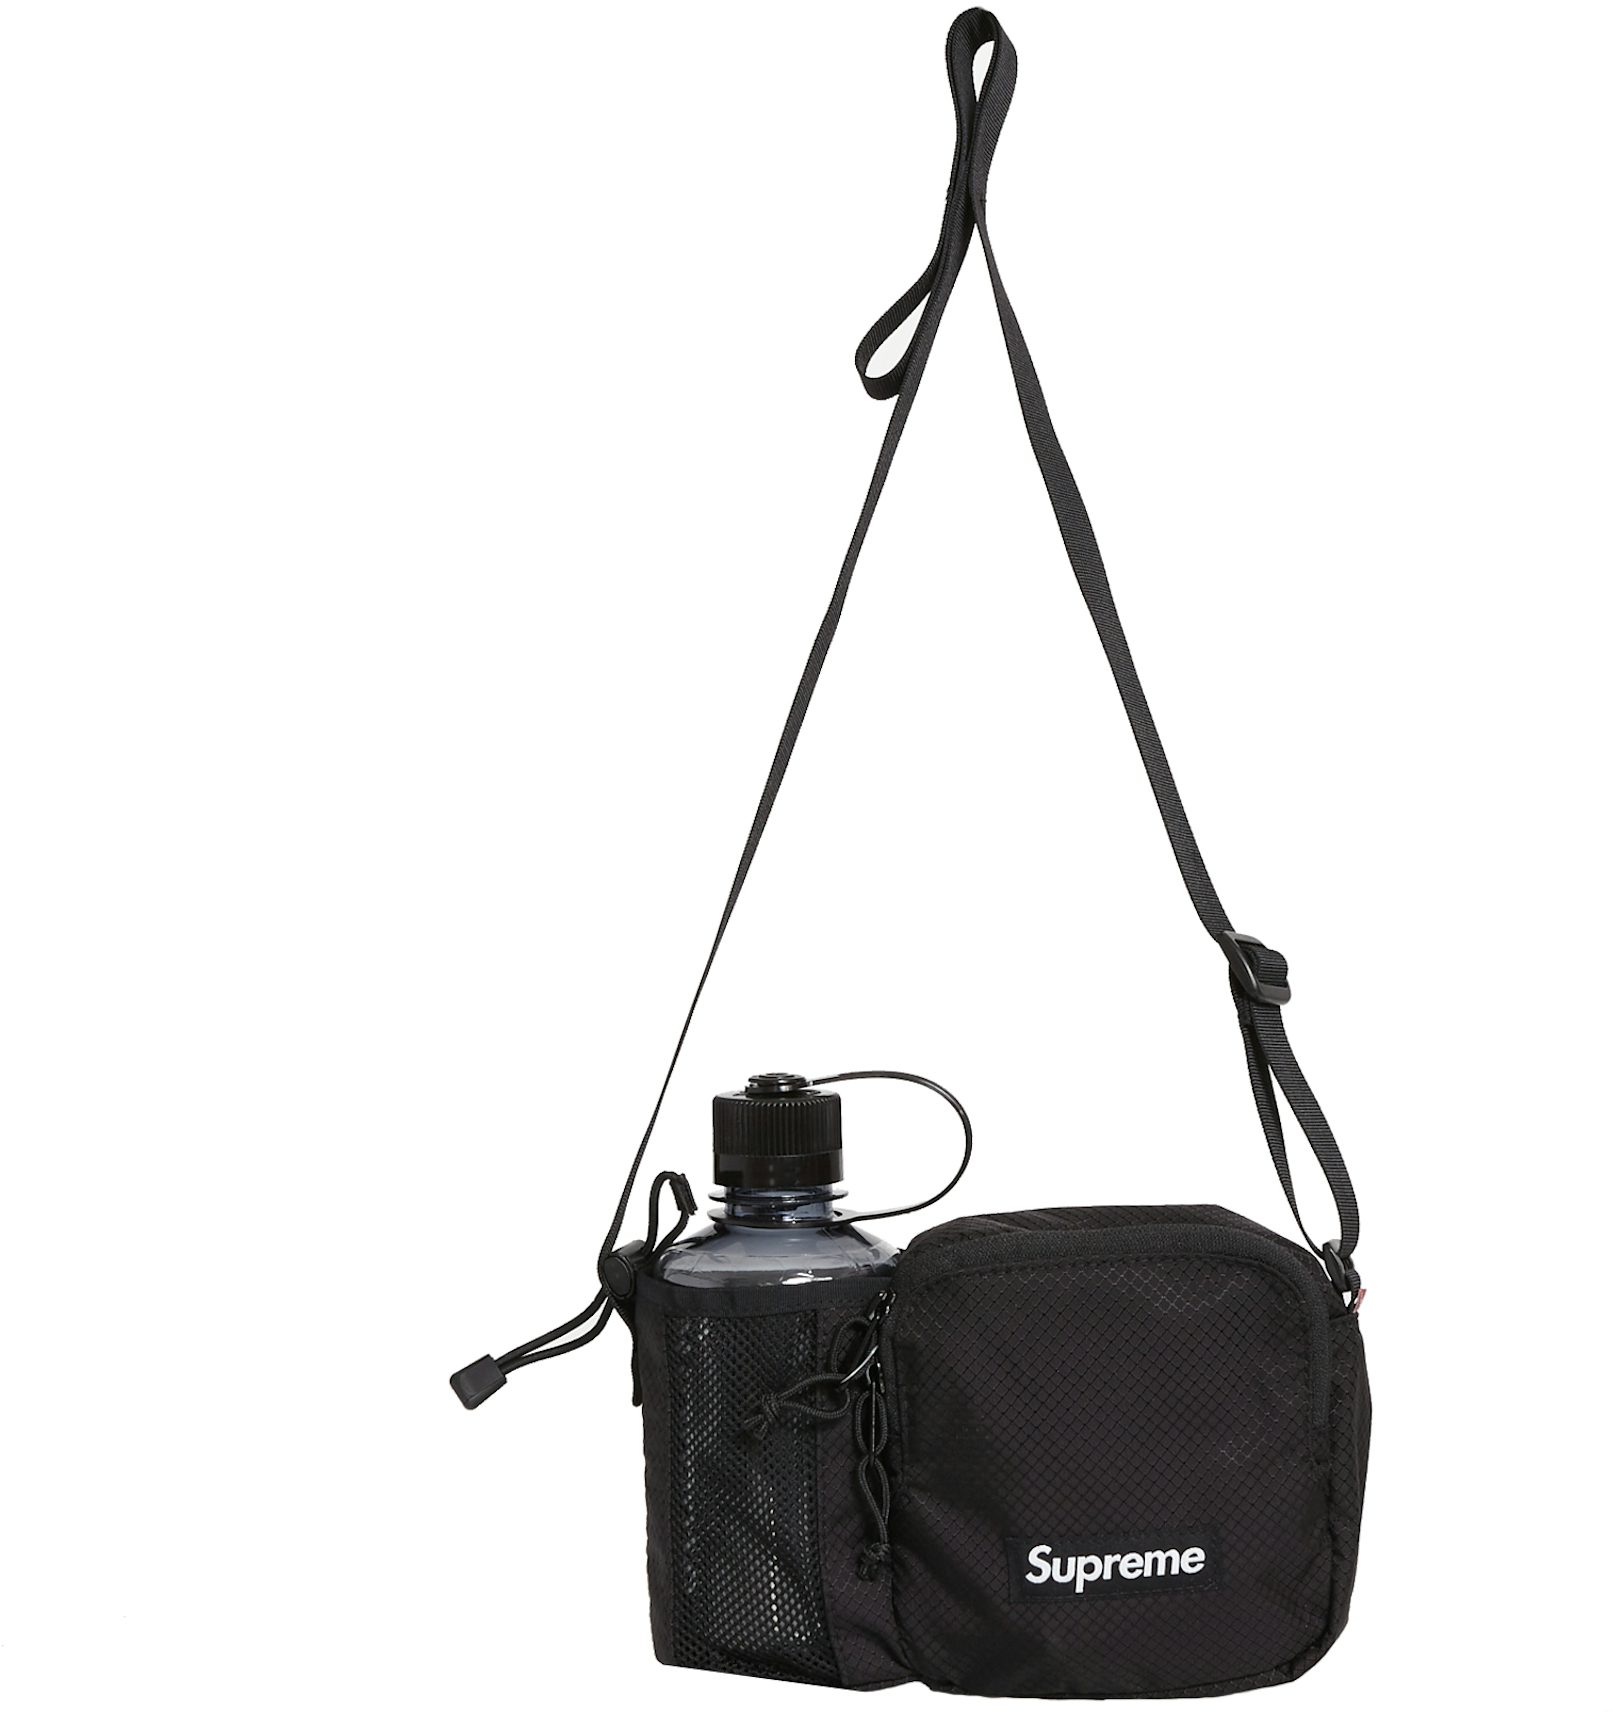 Supreme x Cordura shoulder bag – As You Can See